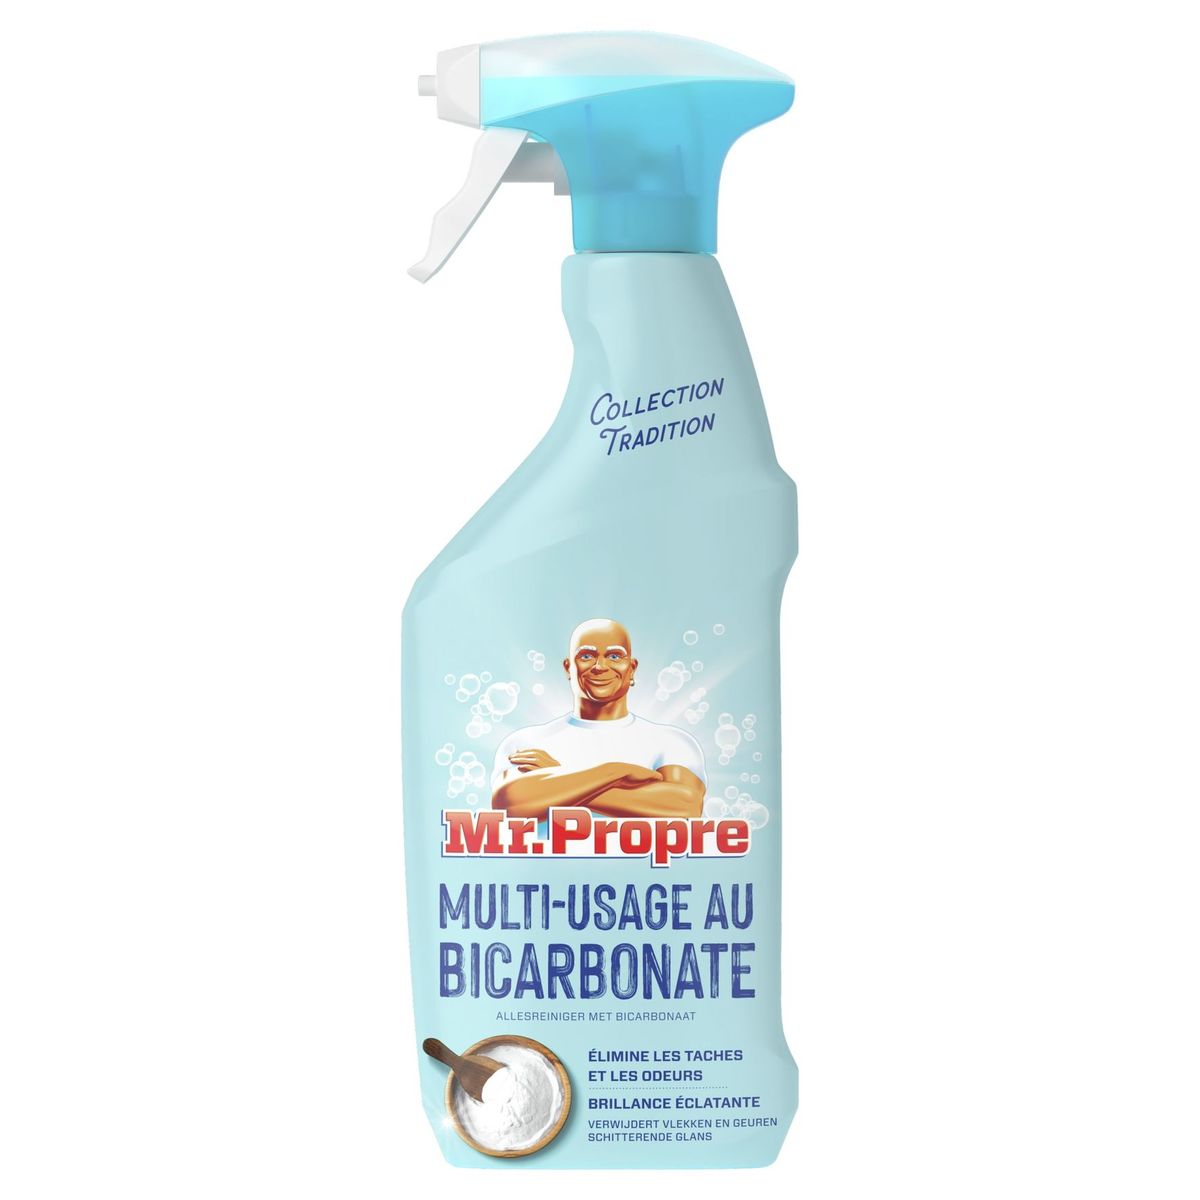 Mr Propre Collection Tradition Allesreiniger Spray Bicarbonaat 500ml